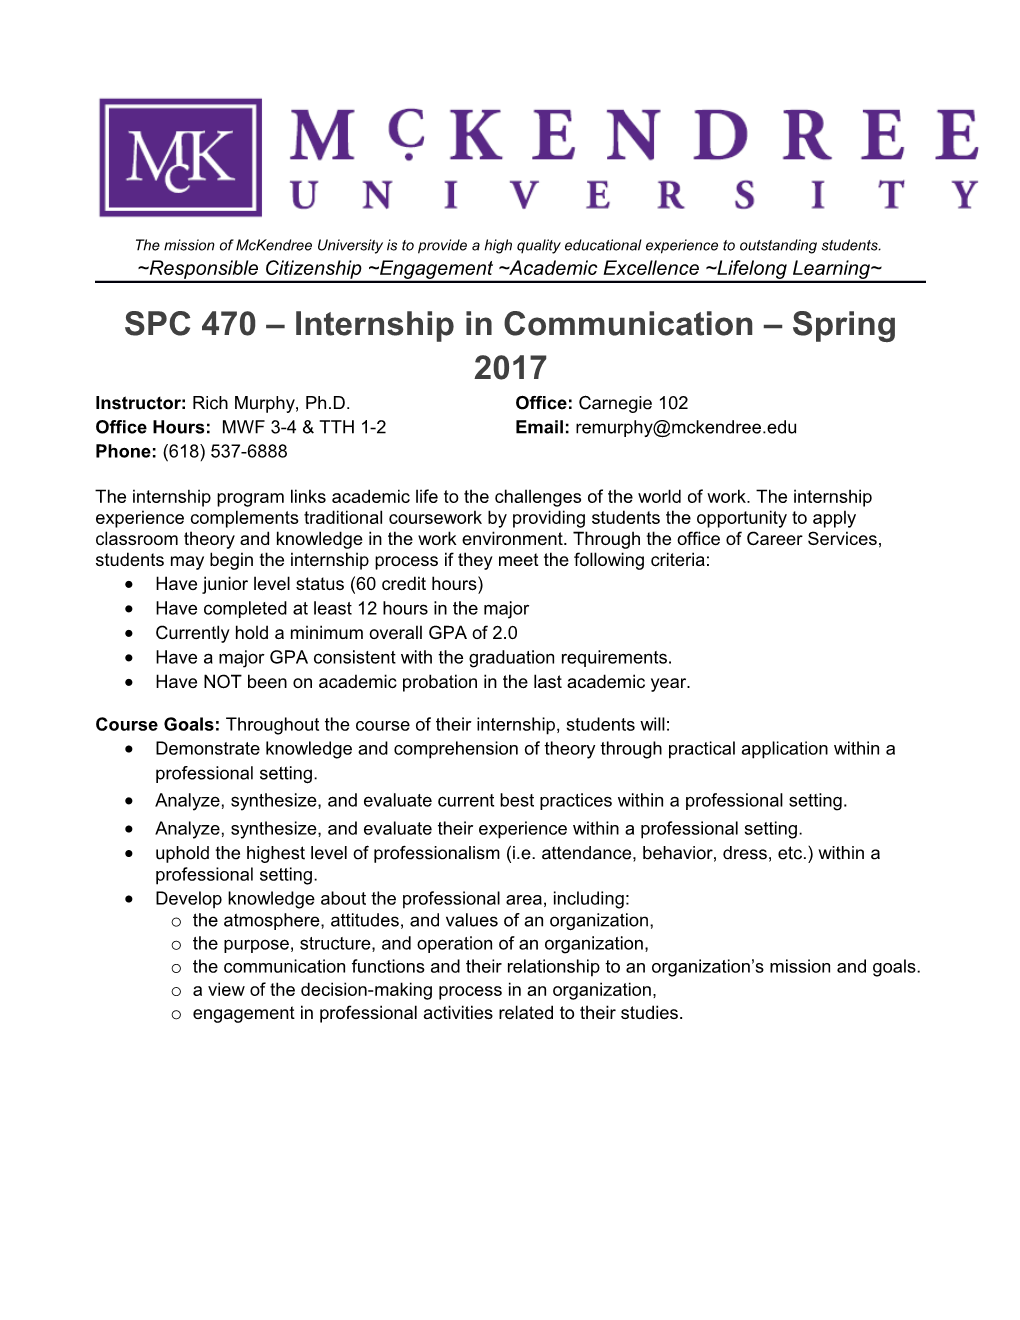 SPC 470 Internship in Communication Spring 2017